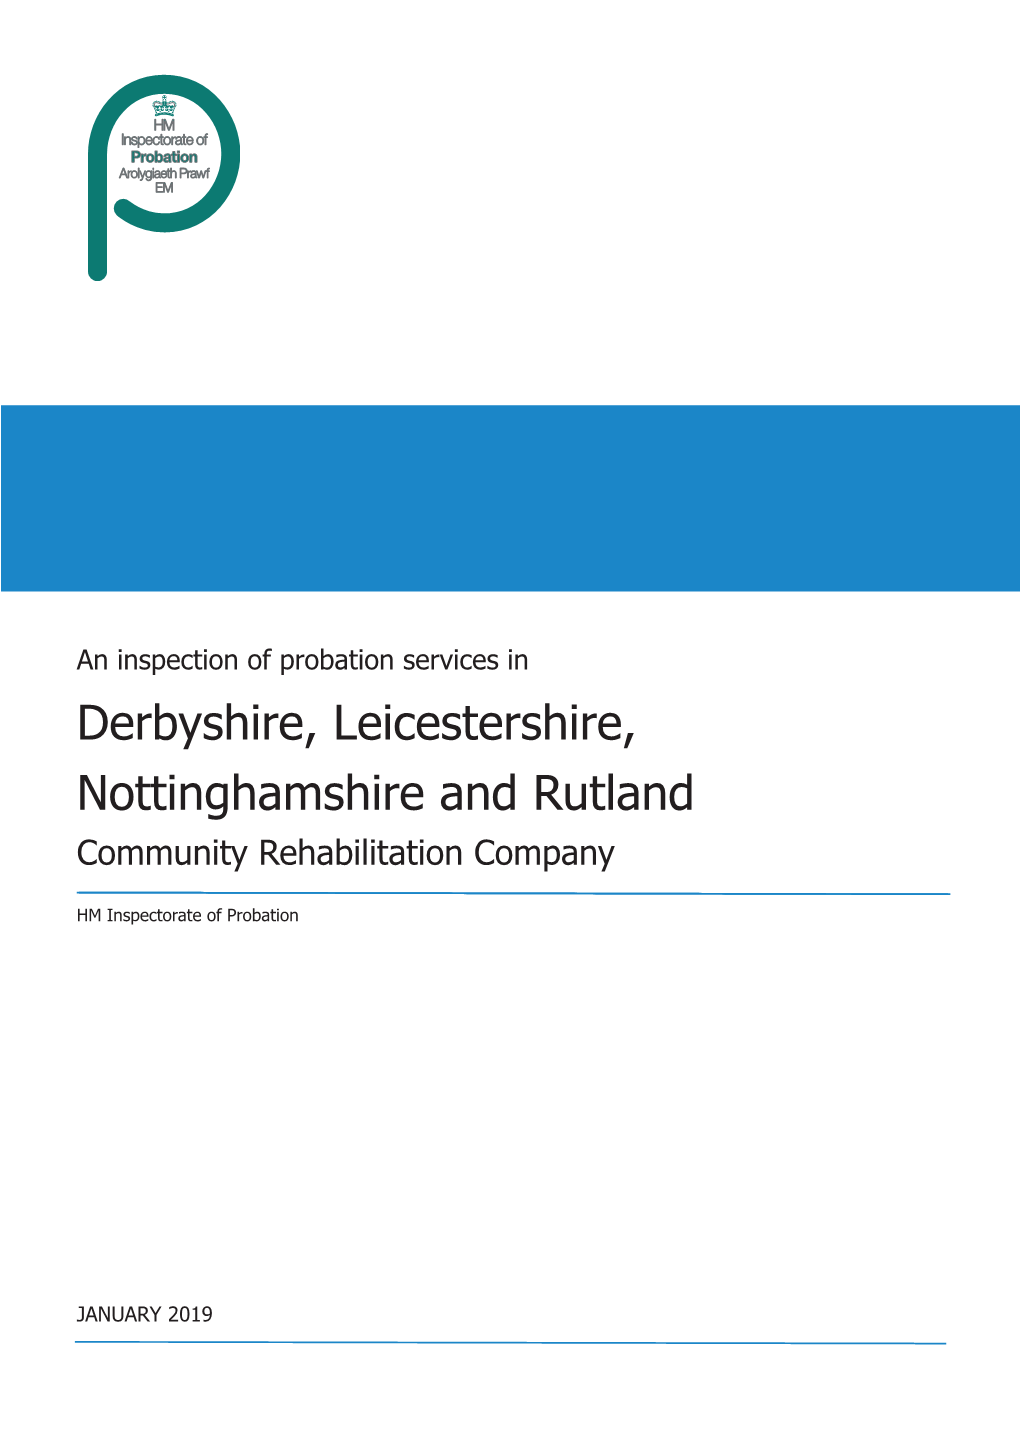 Derbyshire, Leicestershire, Nottinghamshire and Rutland Community Rehabilitation Company